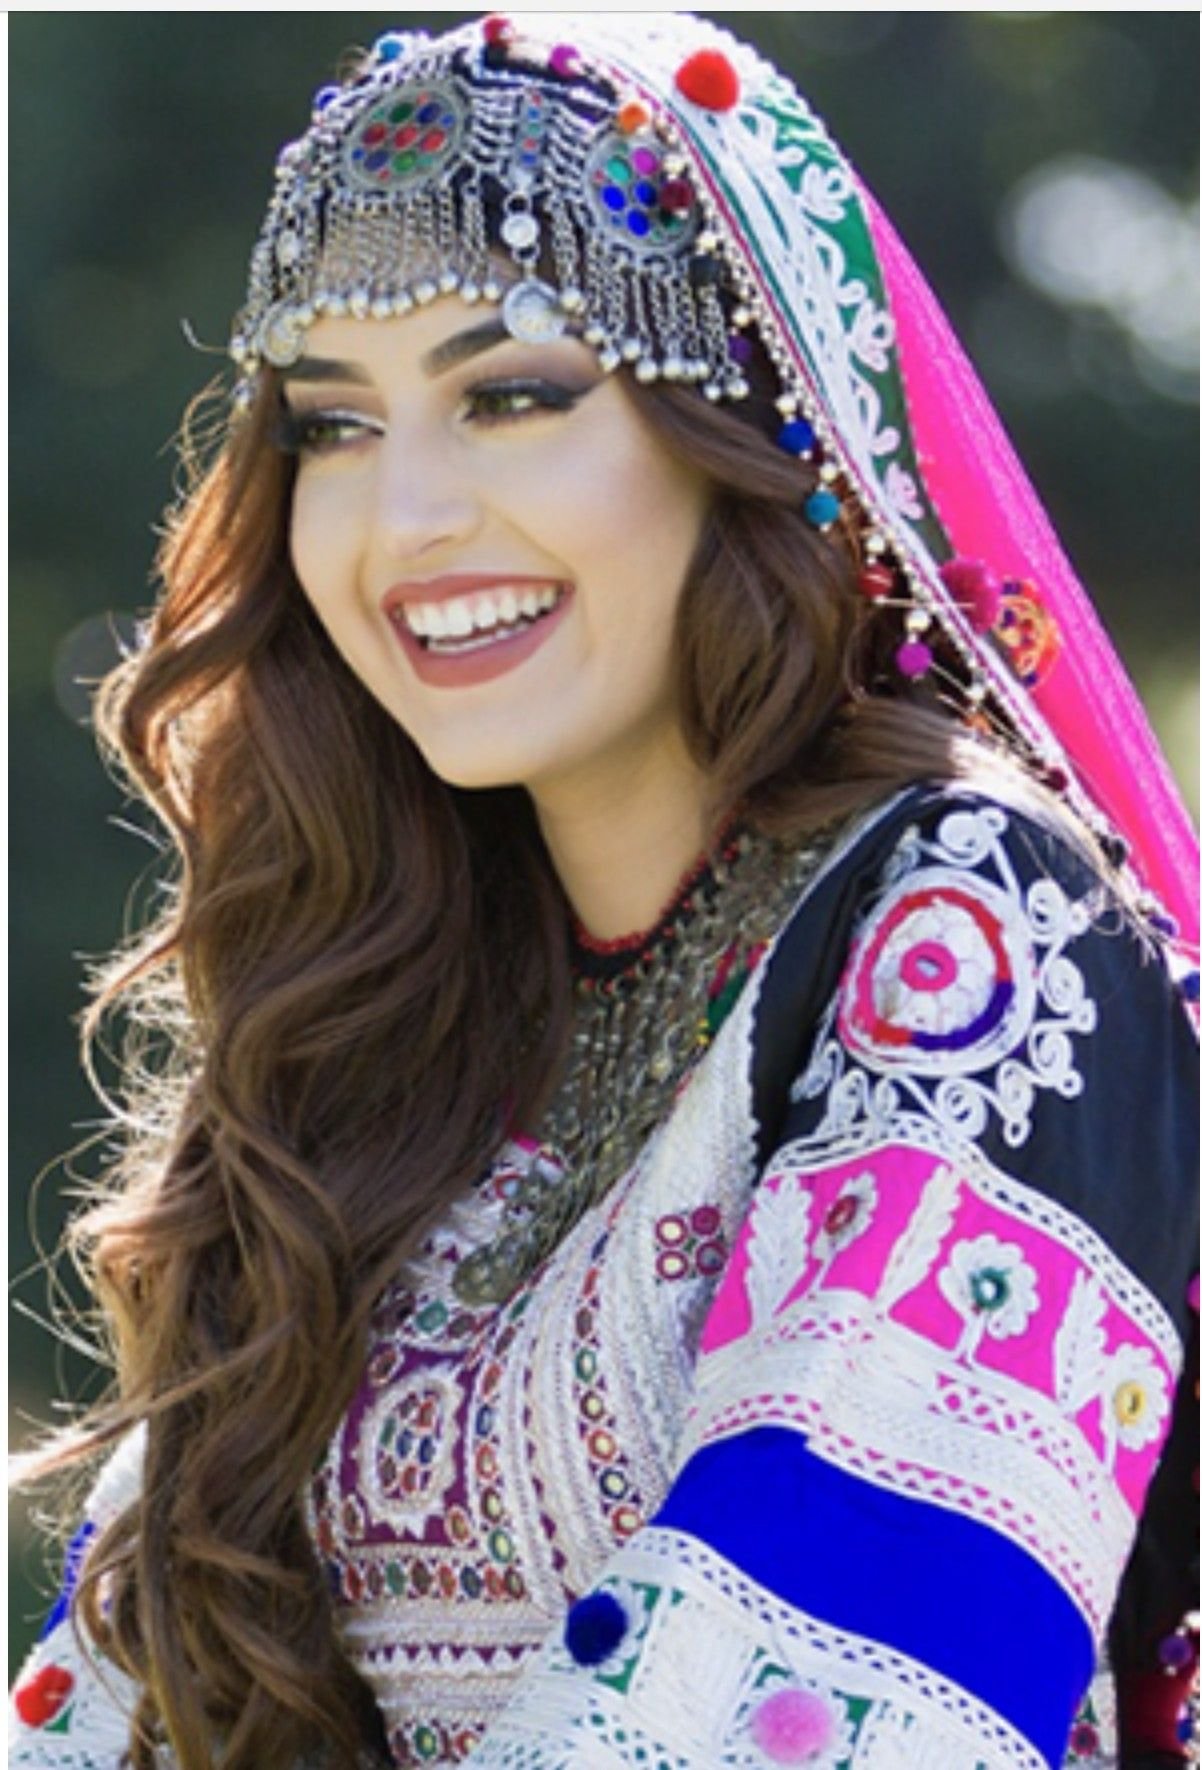 Таджикски девчонки. Гульбахар Бекназар. Певица Зебо. Гульбазар Бекназар модель. Красивые таджикские девушки.